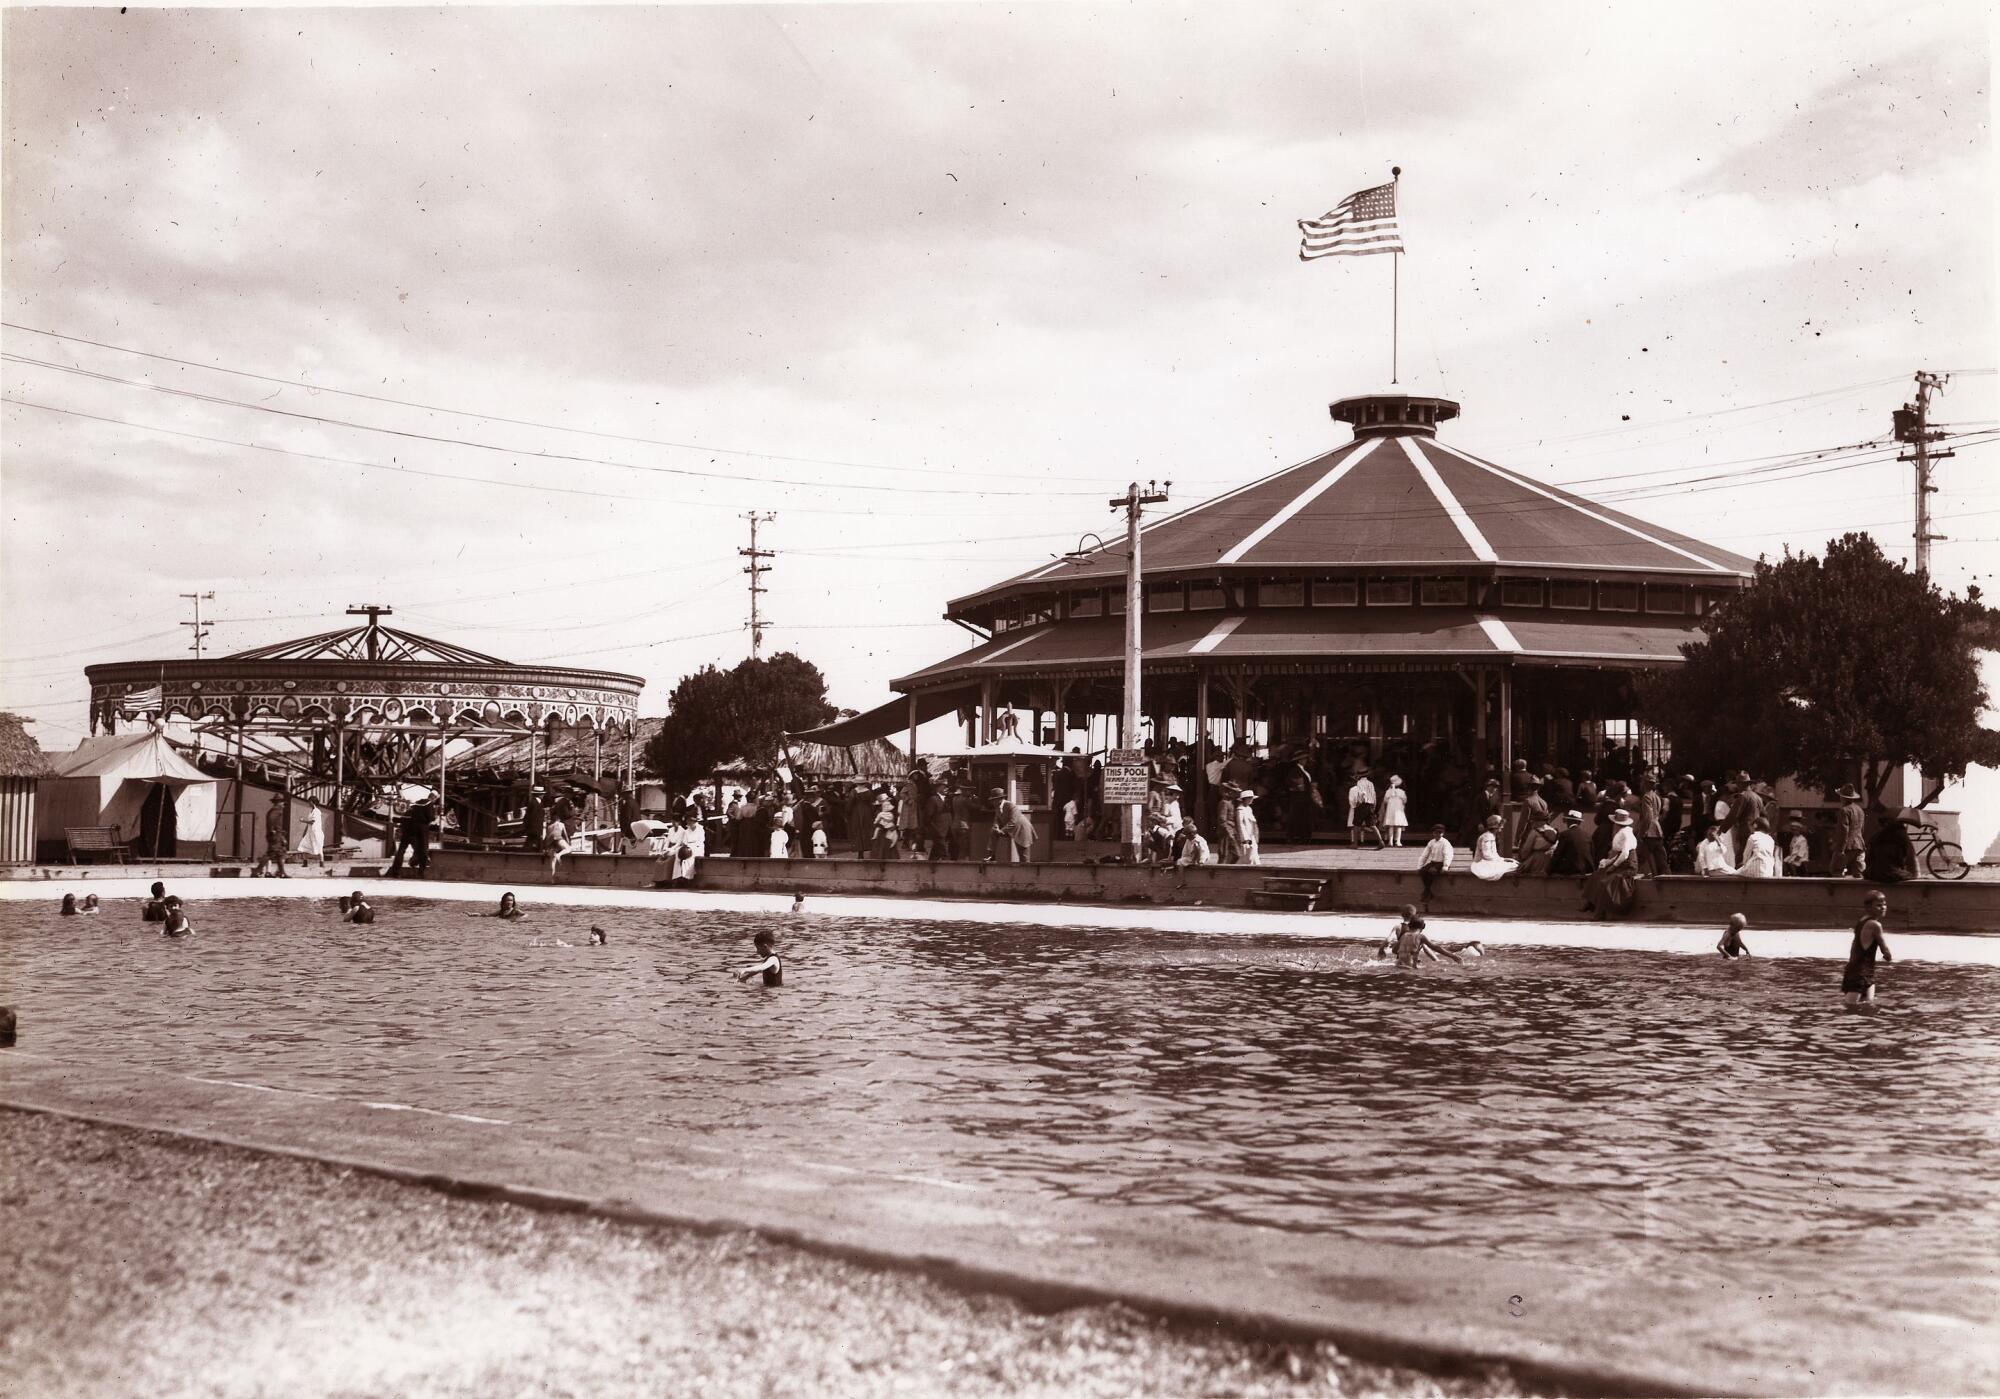 Carousel at the Tent City summer resort in Coronado in 1915.